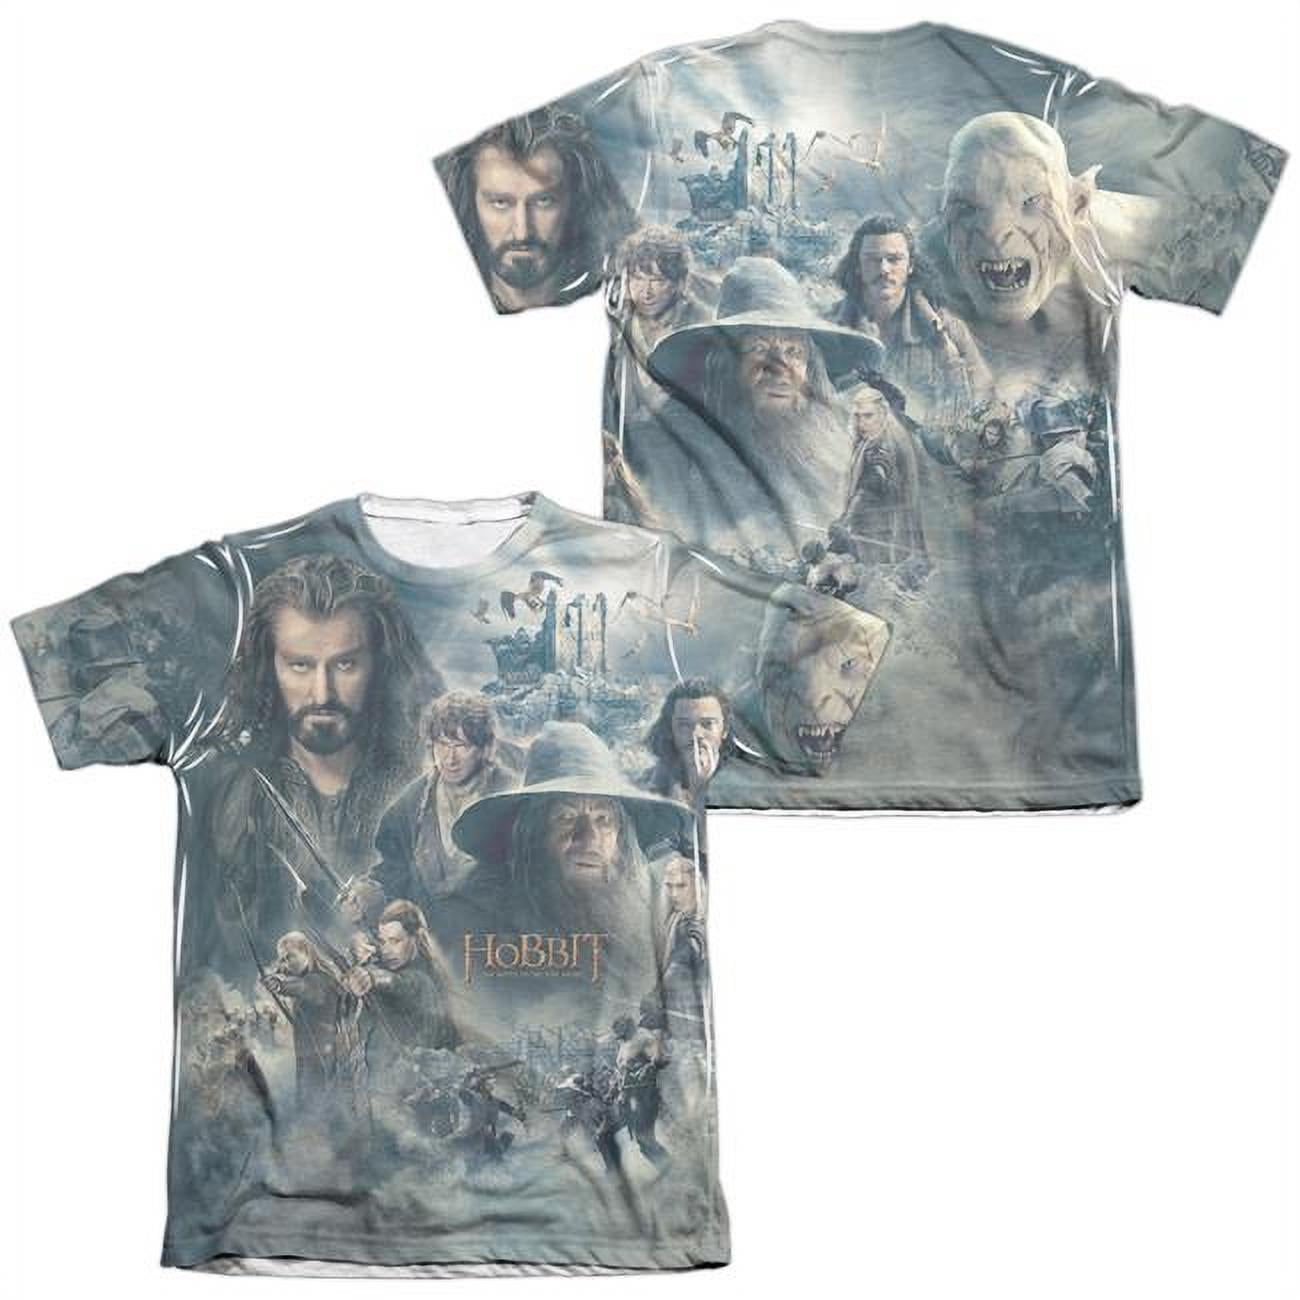 Hobbit - Epic Poster (Front/Back) - Short Sleeve Shirt - Medium